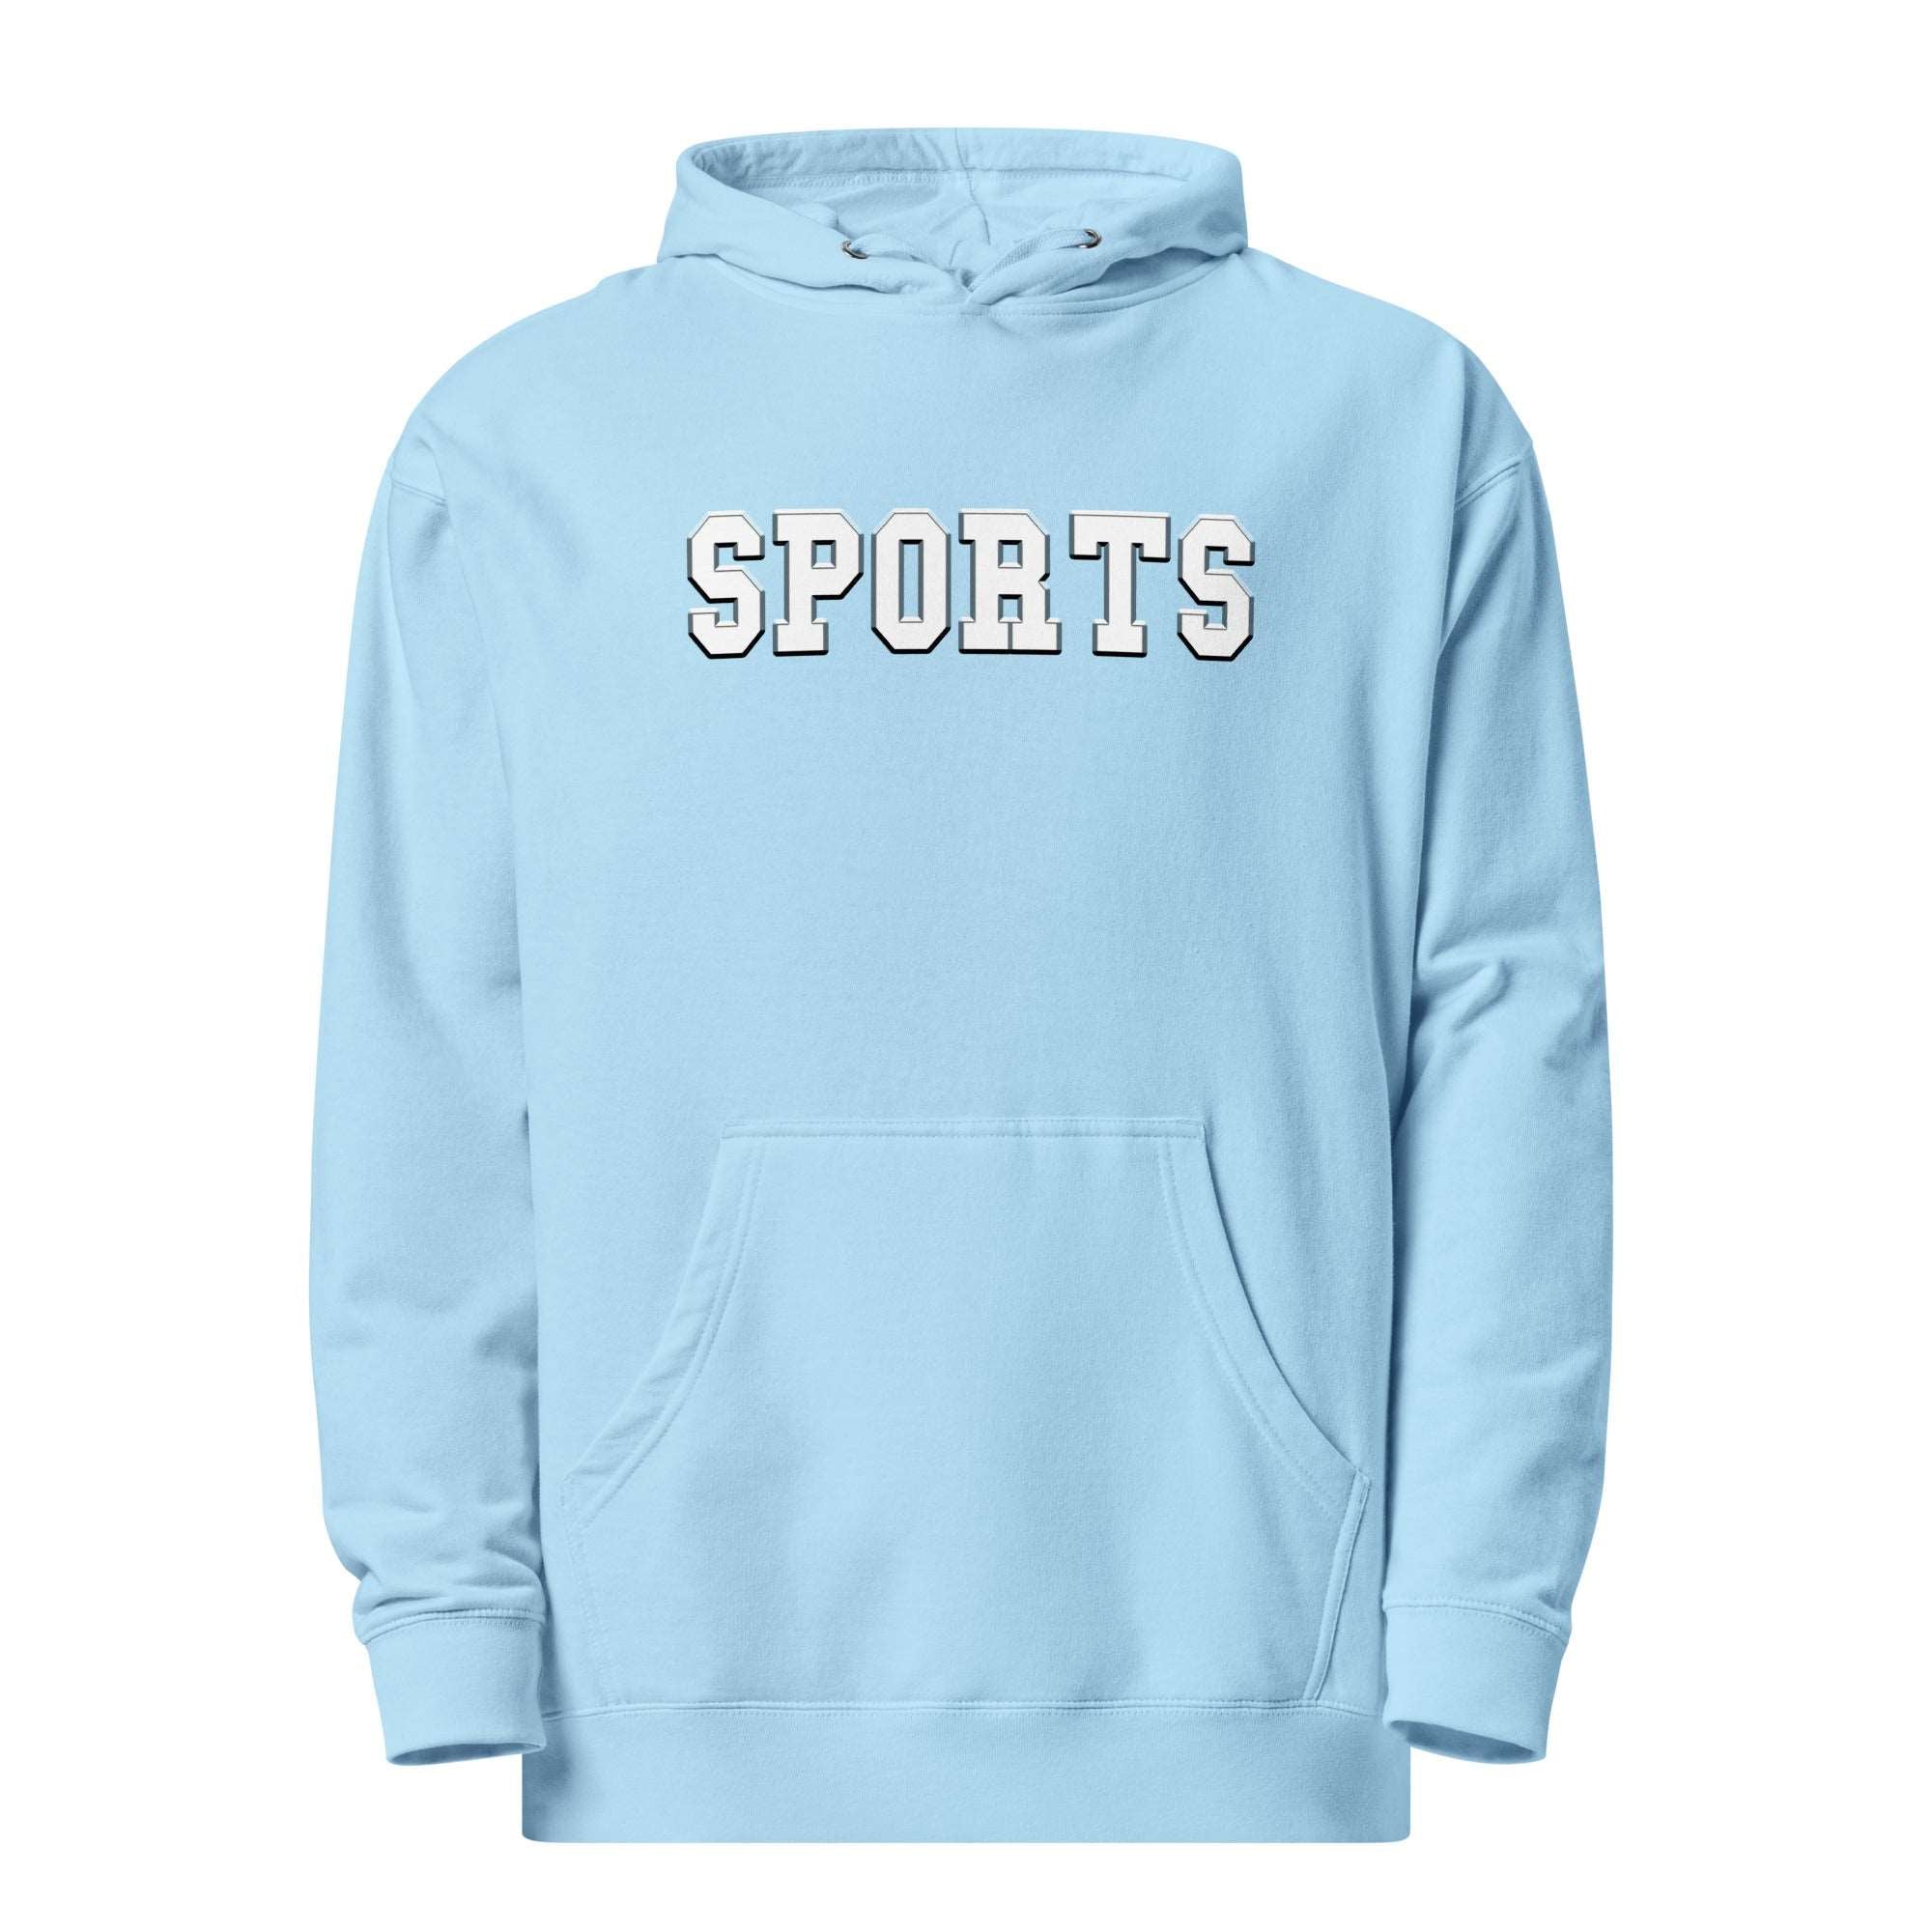 SPORTS! Unisex midweight hoodie